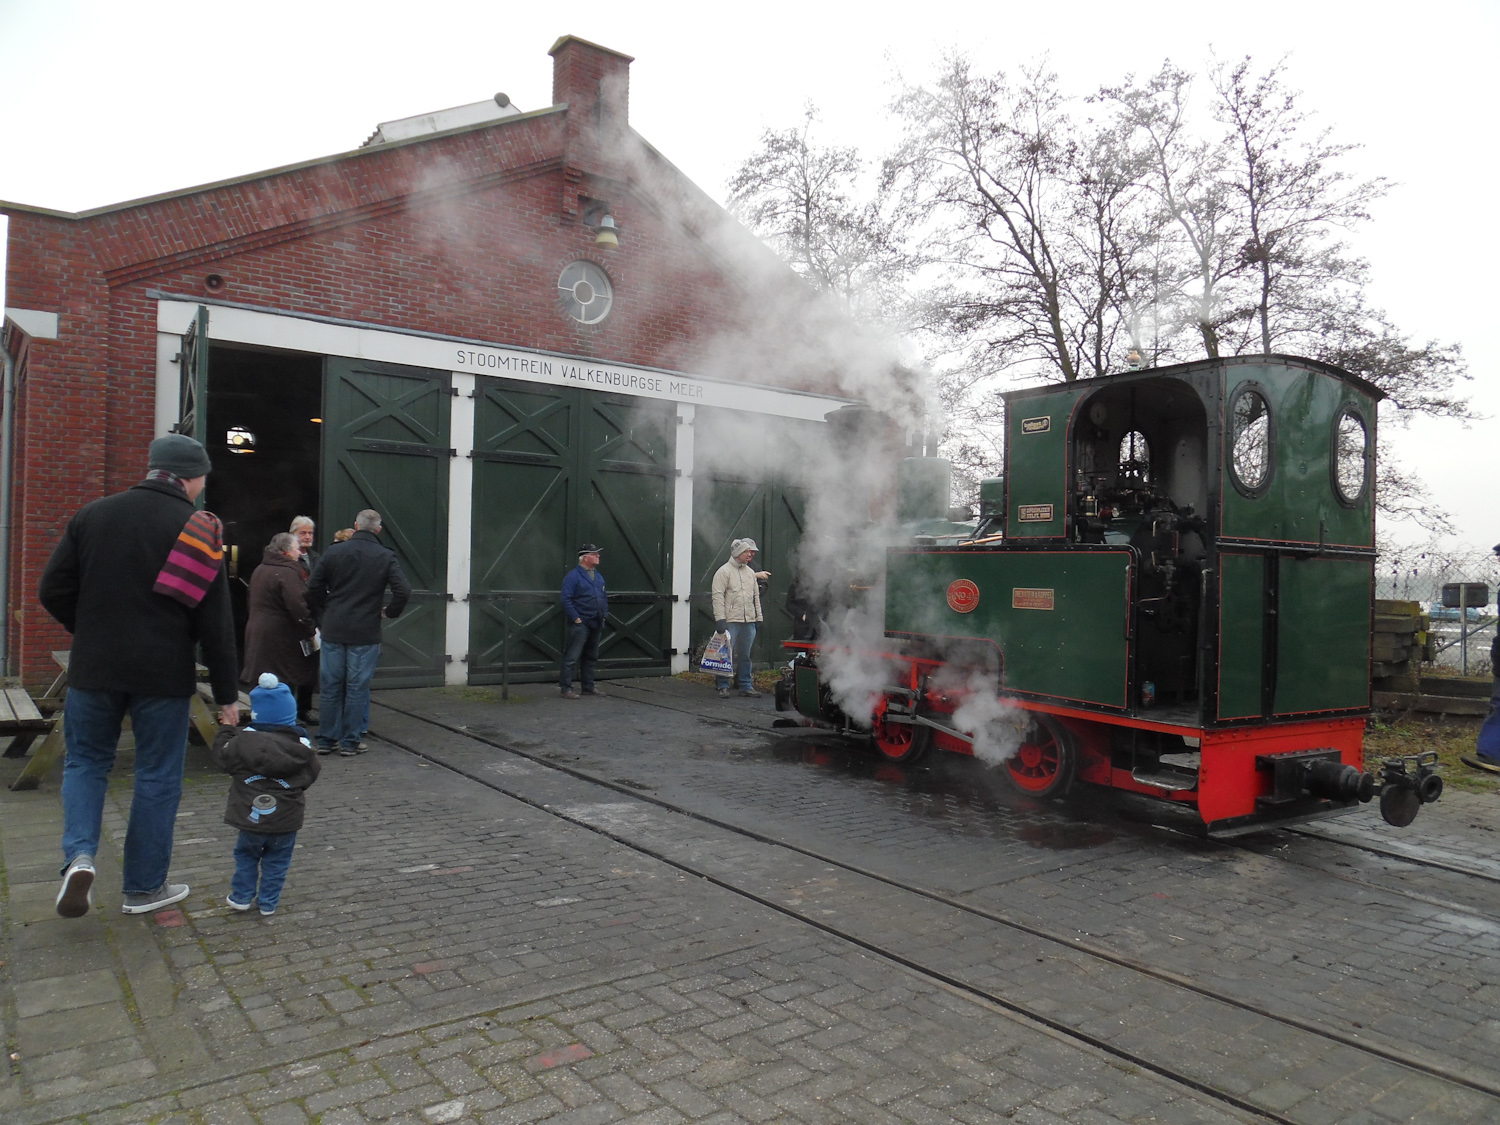 Visit to the Steam train Katwijk Leiden museum